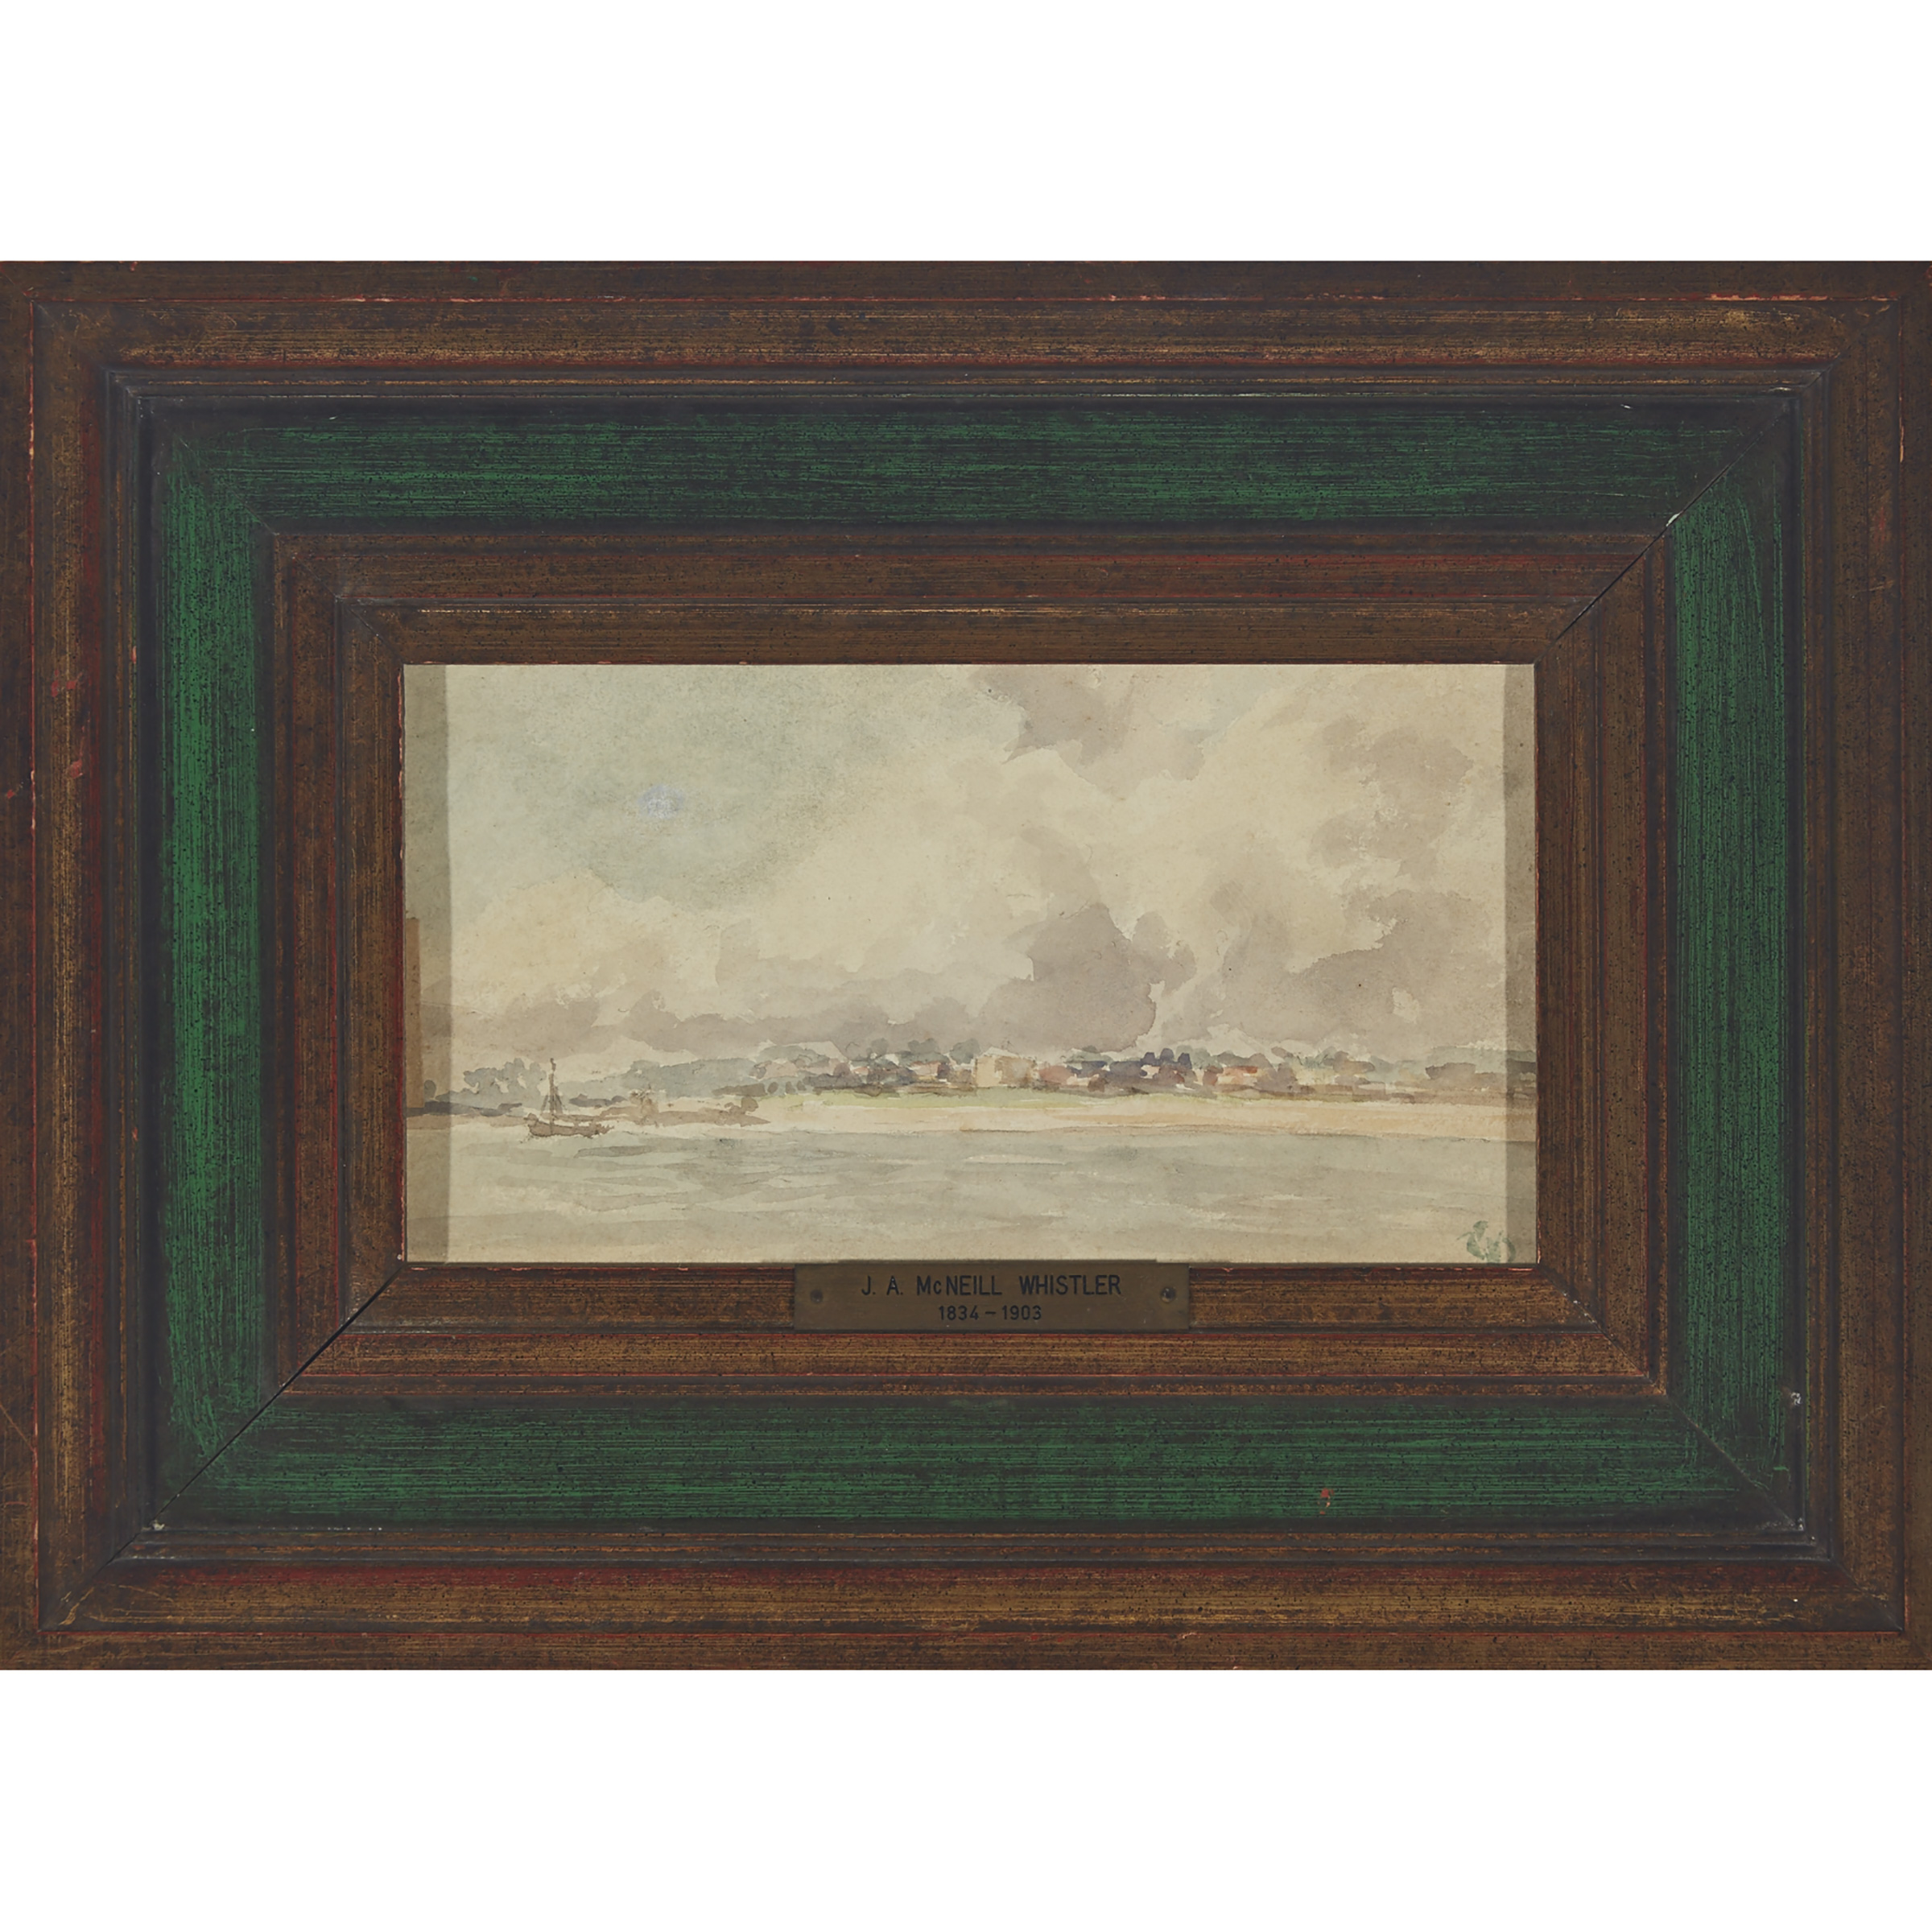 Follower of James Abbott McNeill Whistler (1834-1903)